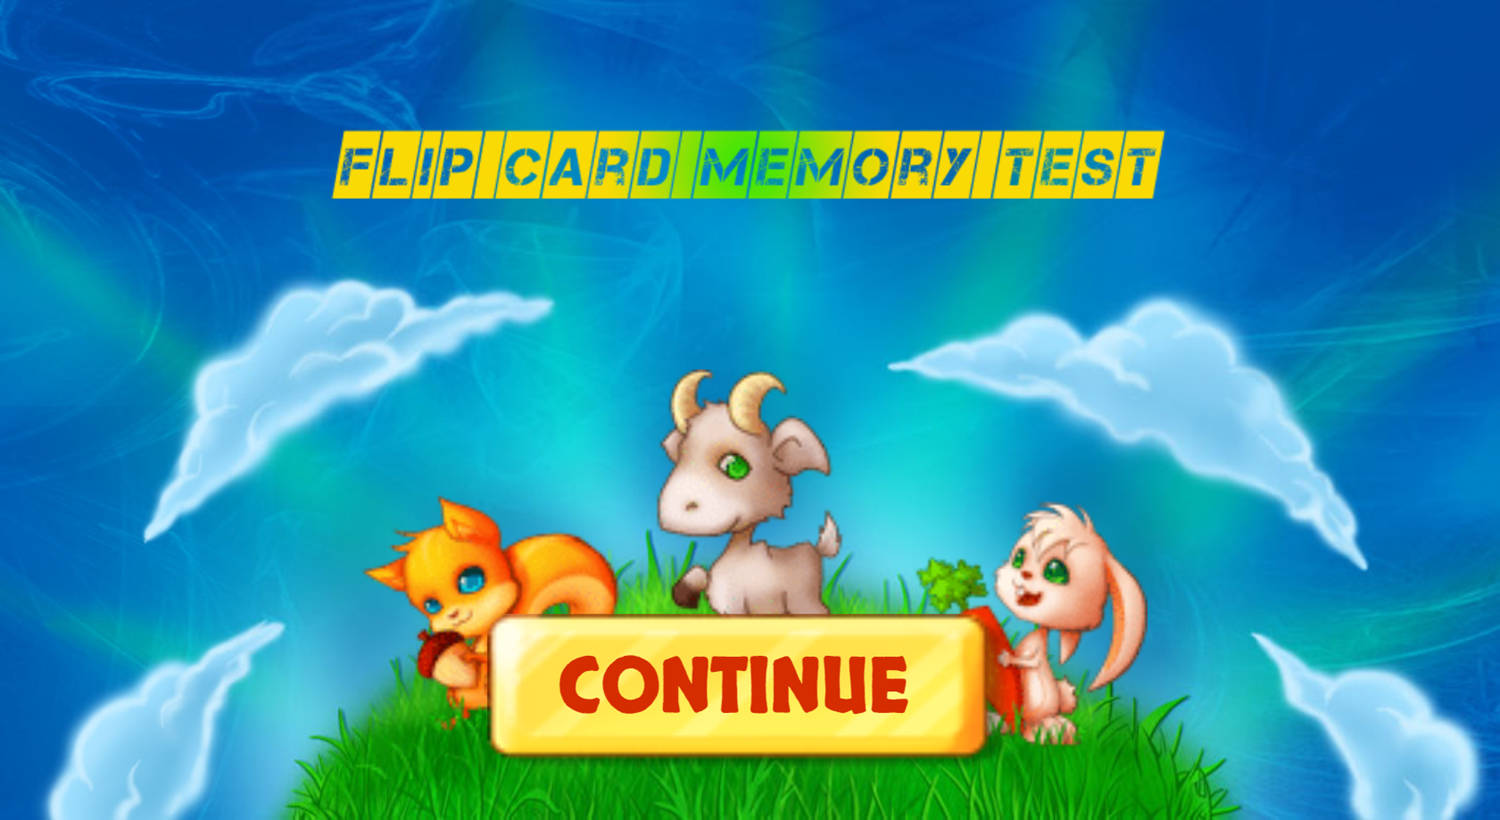 Flip Card Memory Test Game Welcome Screen Screenshot.